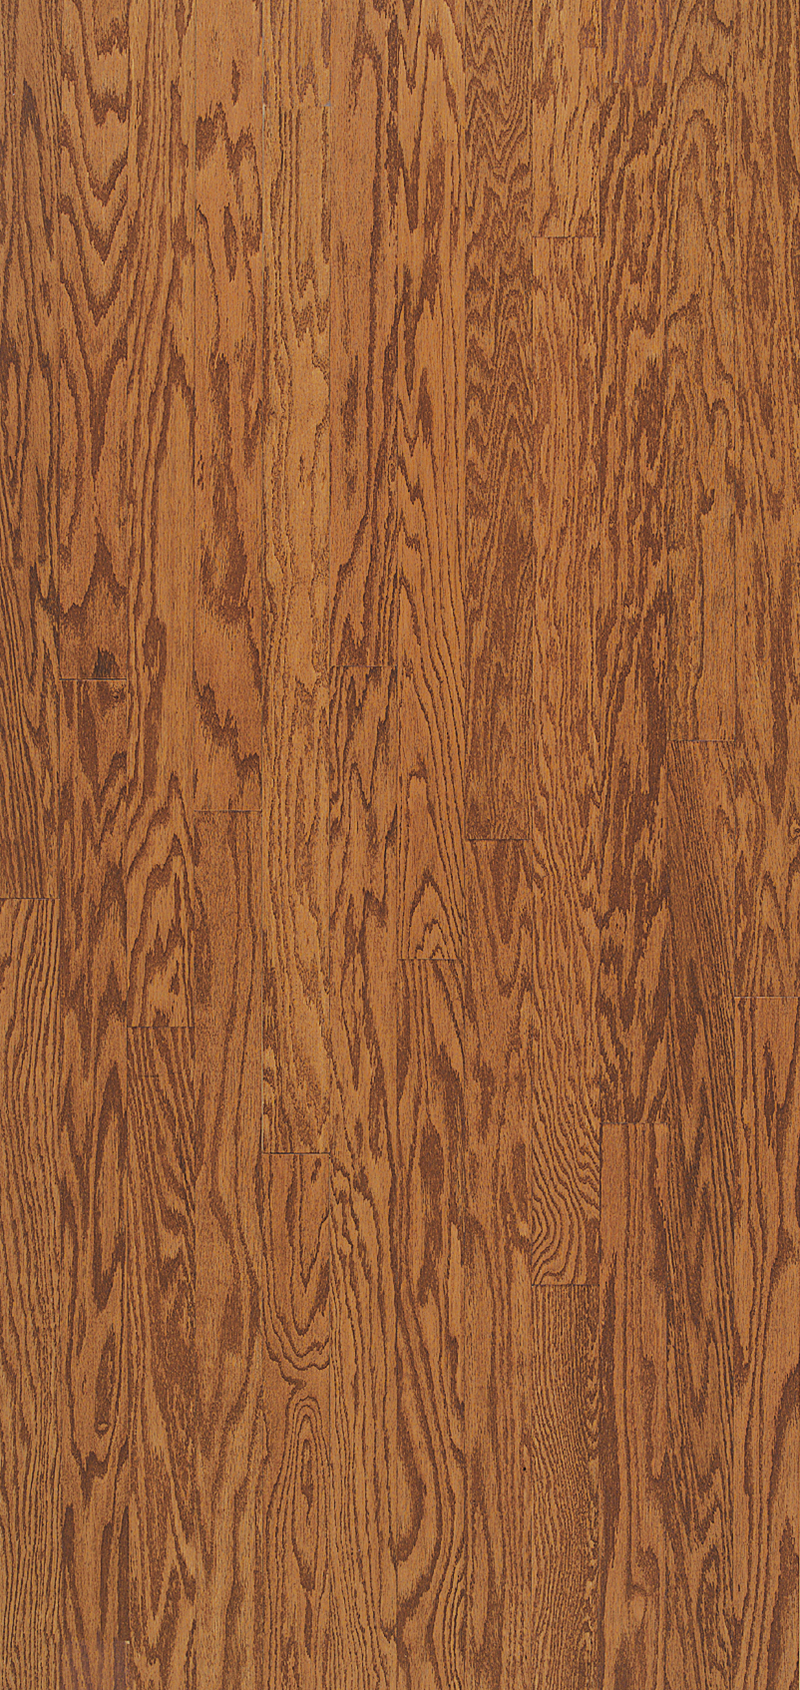 Gunstock 5" - Turlington Collection - Engineered Hardwood Flooring by Bruce - Hardwood by Bruce Hardwood